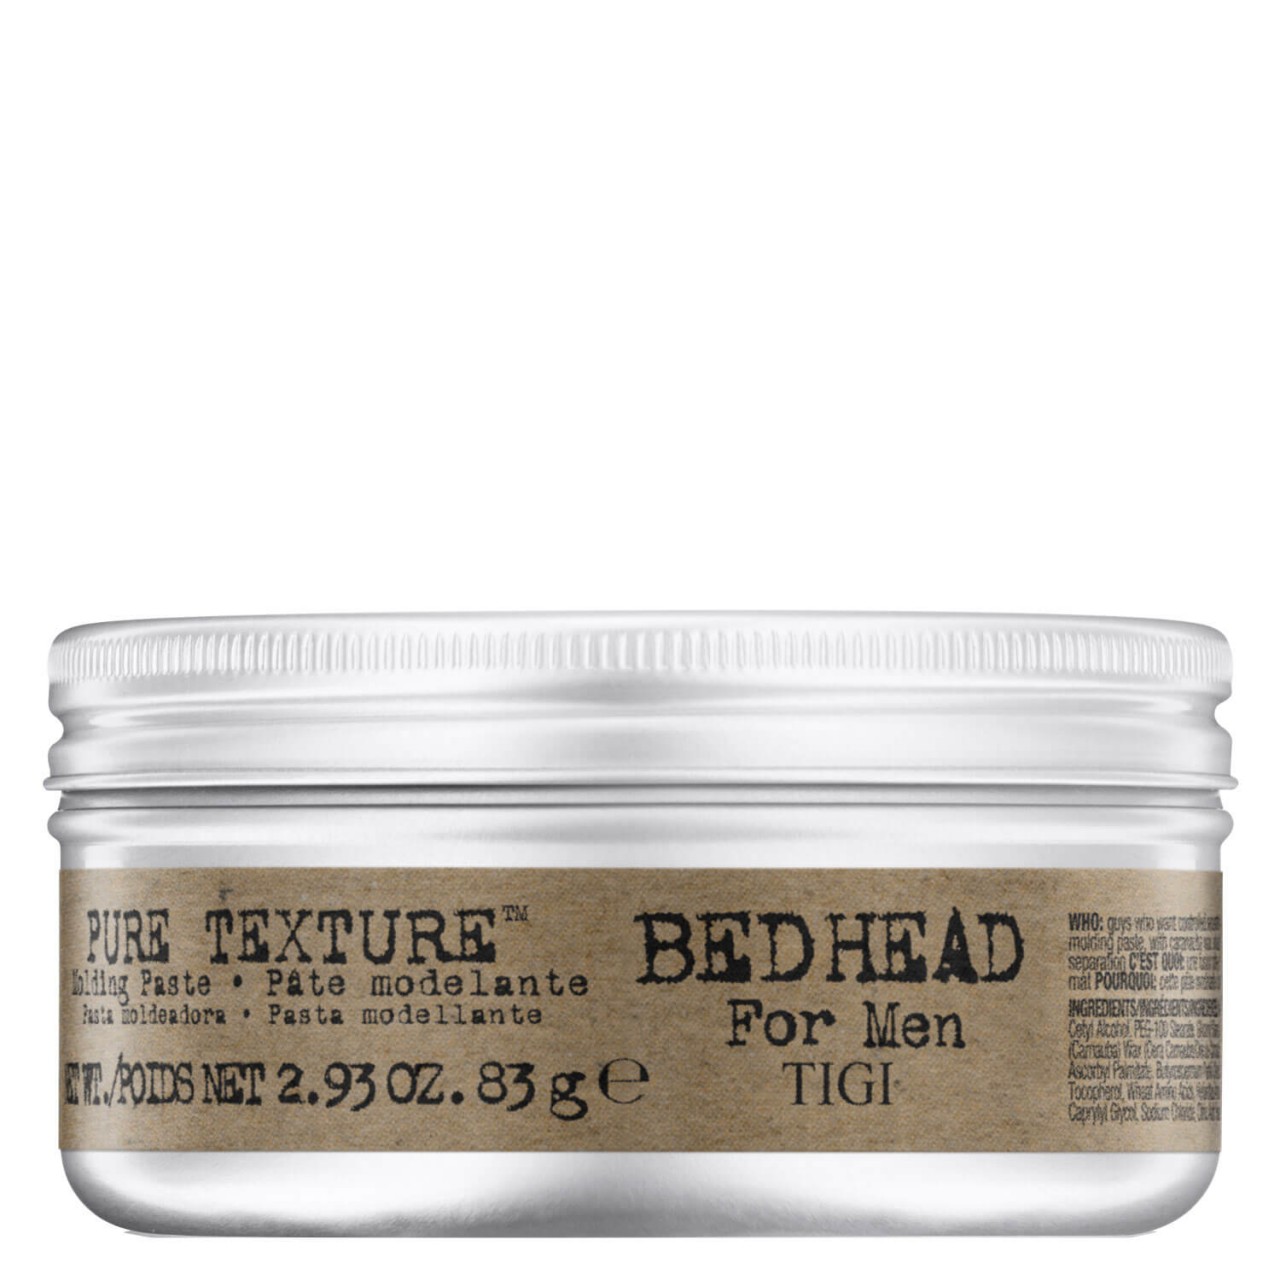 Bed Head For Men - Pure Texture Molding Paste von TIGI